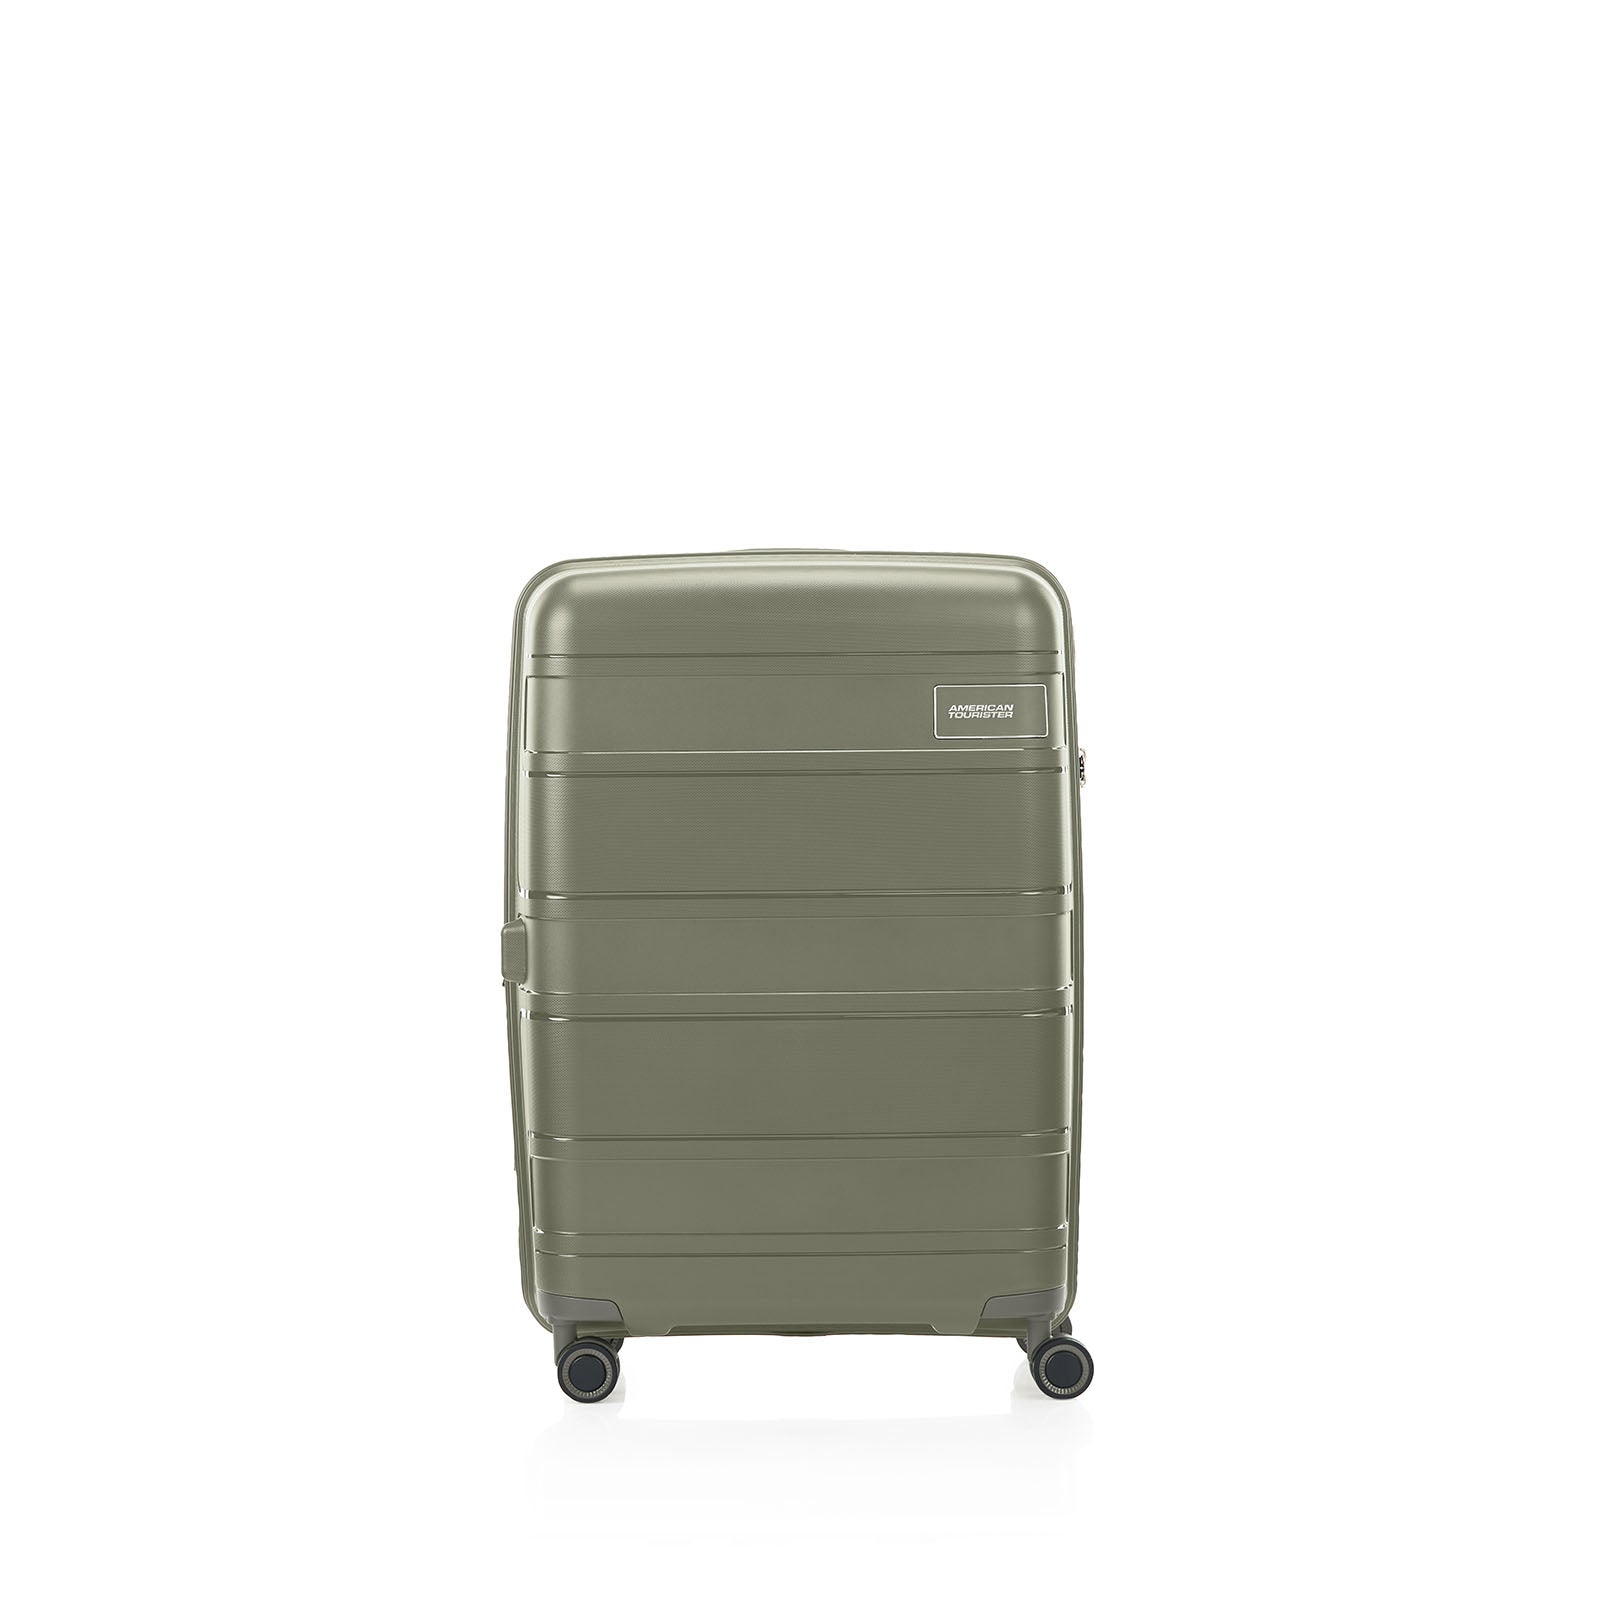 American-Tourister-Light-Max-69cm-Suitcase-Khaki-Front